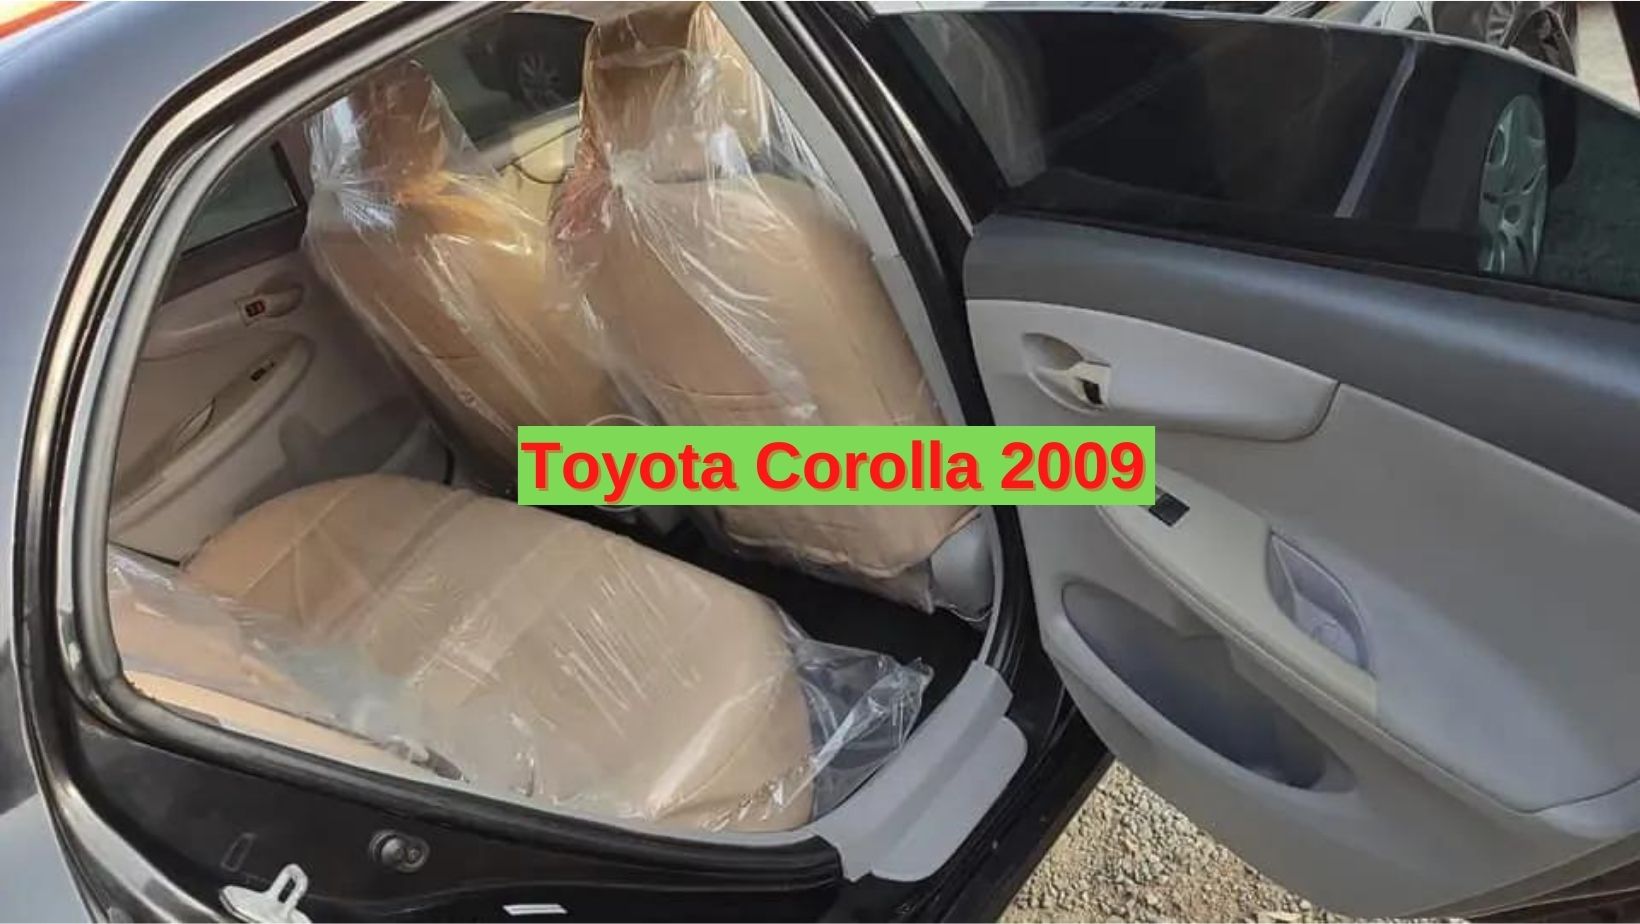 0002 - Toyota Corolla 2009